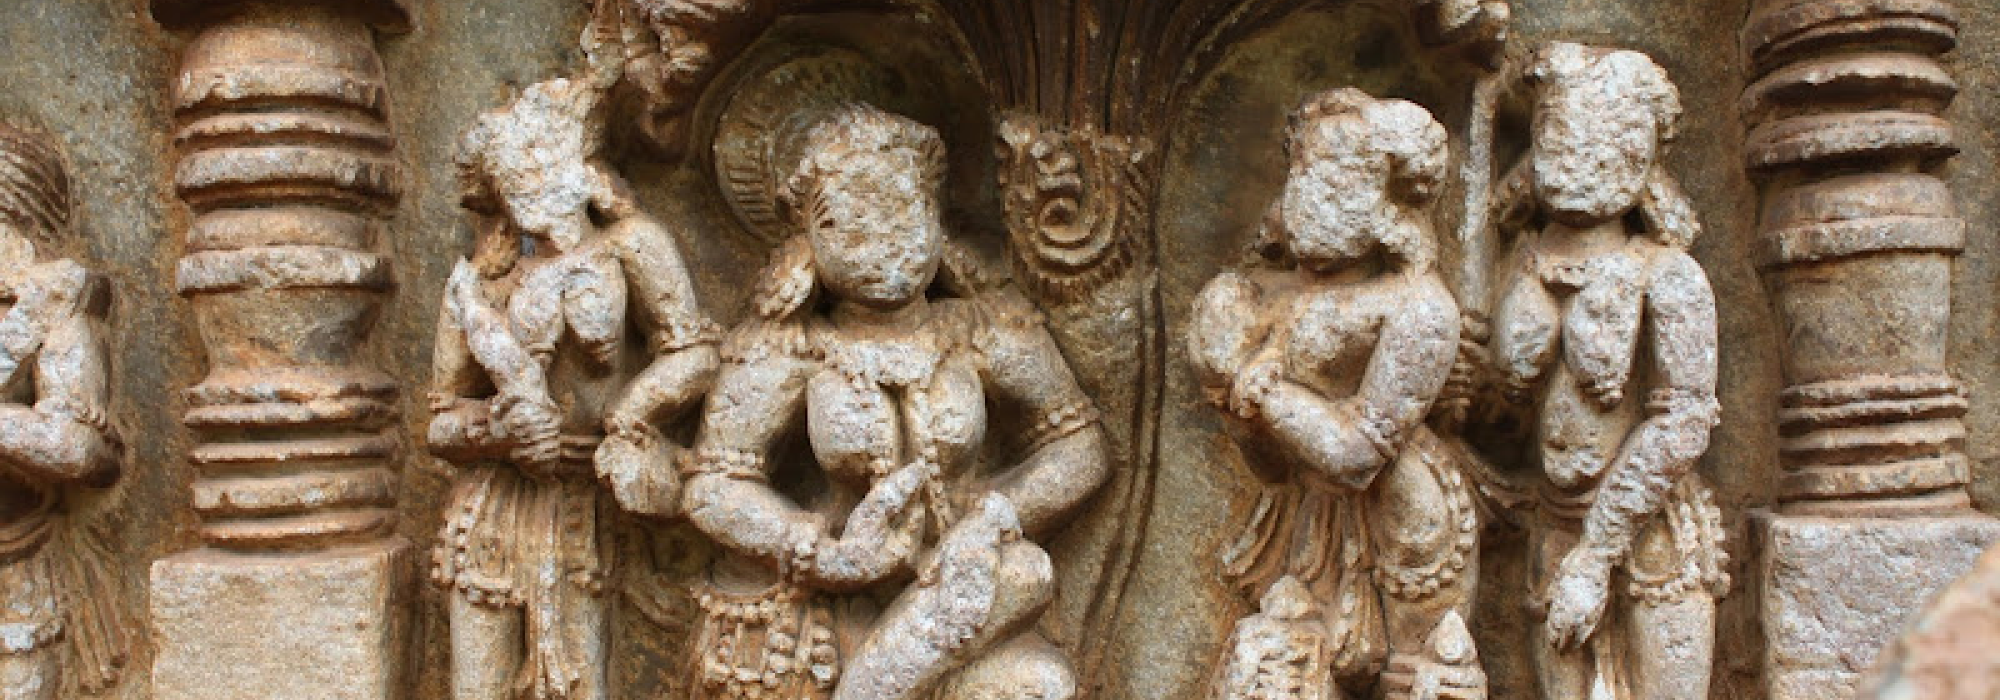 Seeta-head-of-Raama-lakshmana